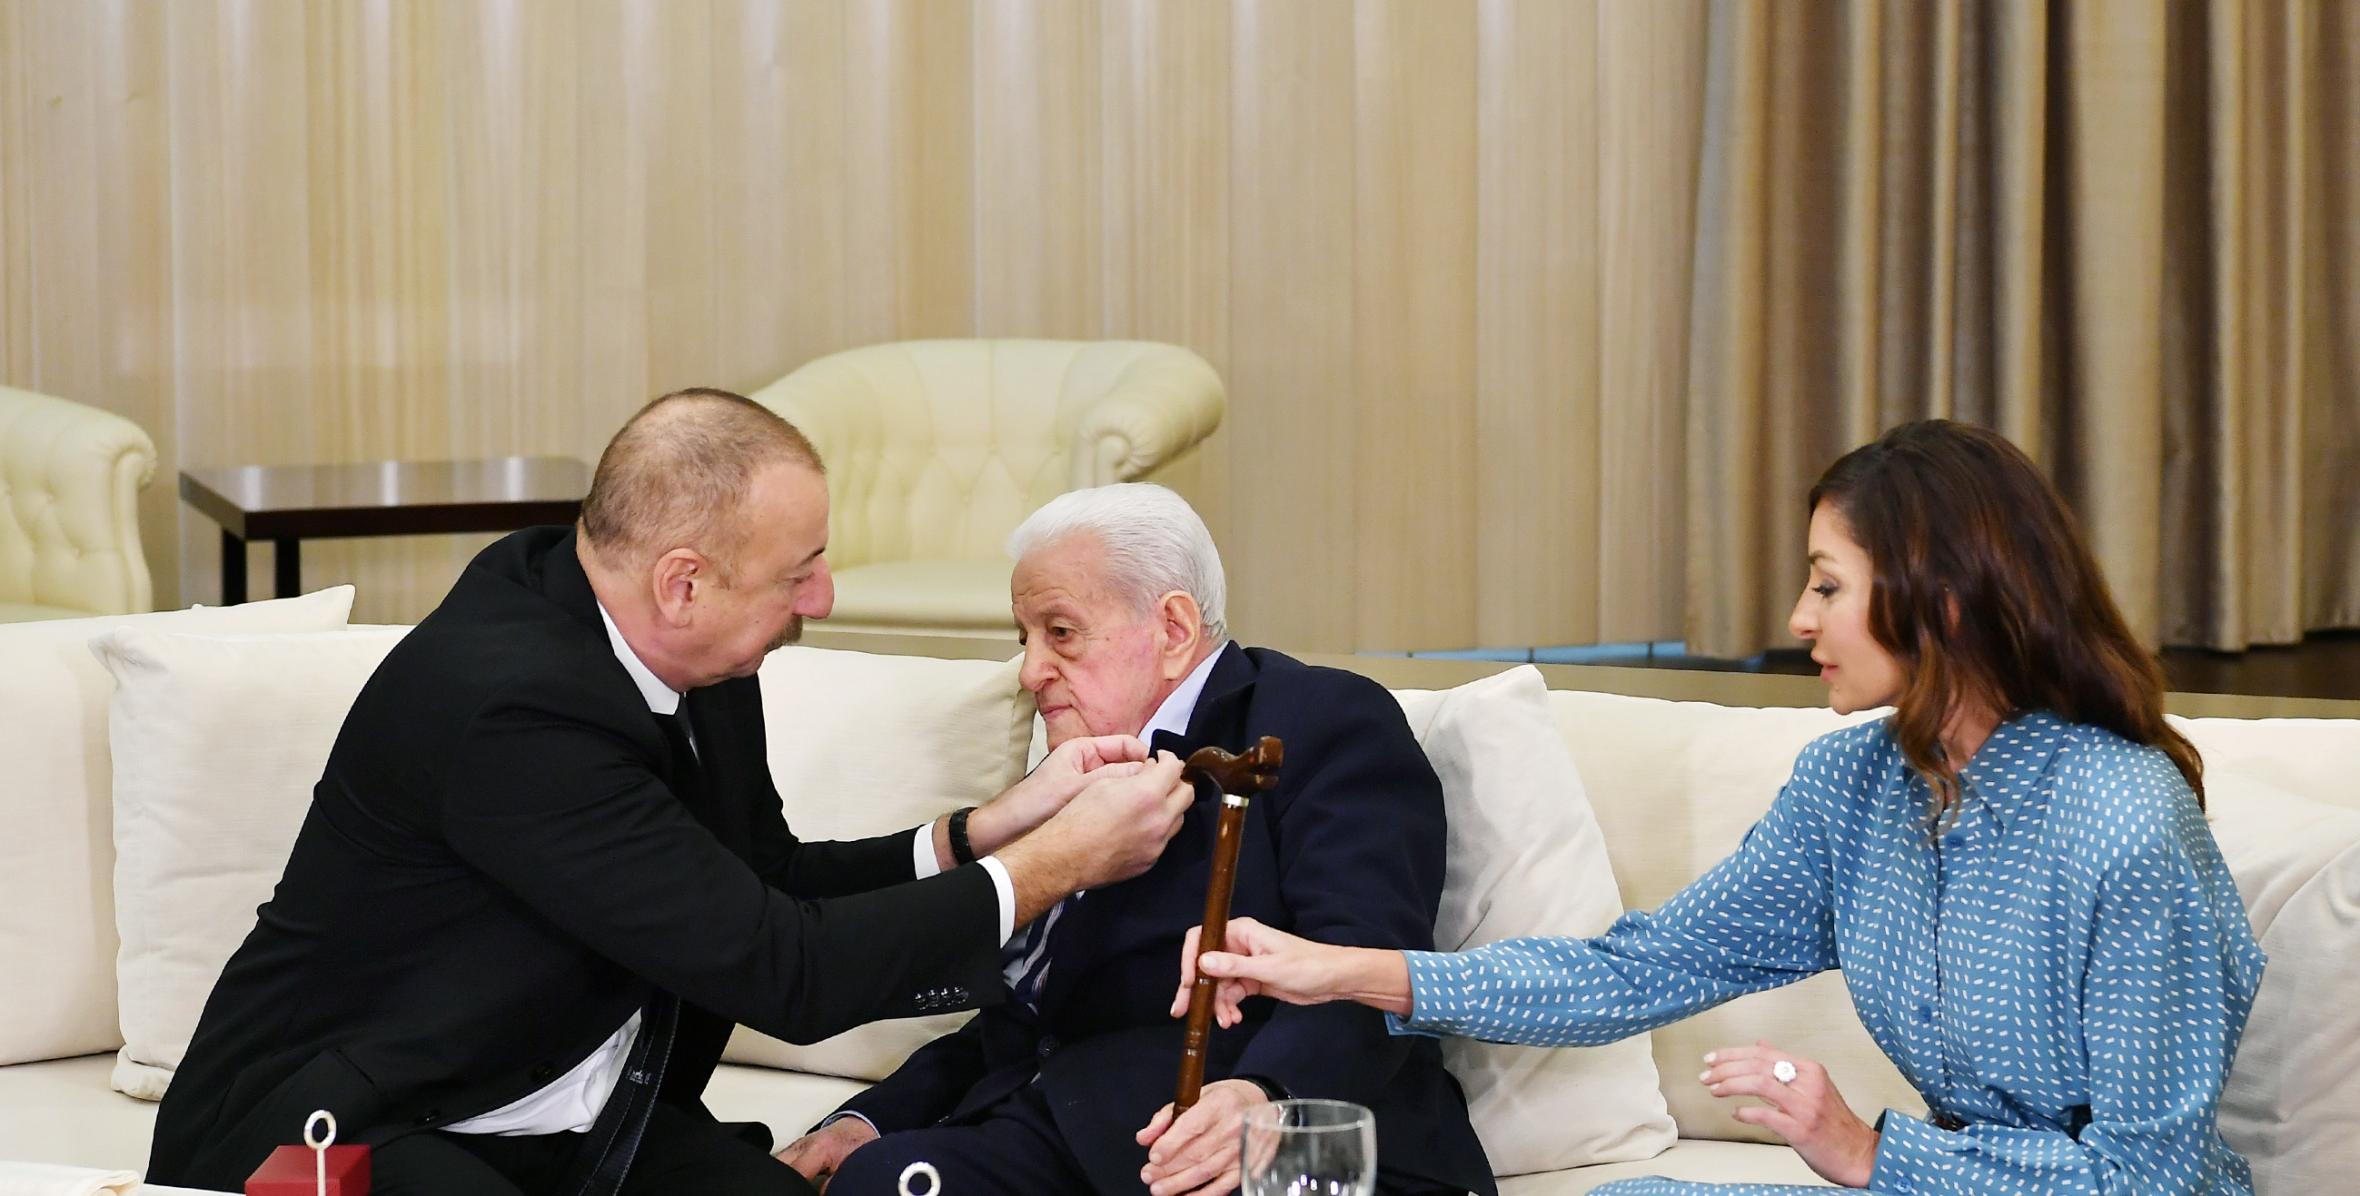 Ilham Aliyev presented "Sharaf" Order to People’s Artist Alibaba Mammadov